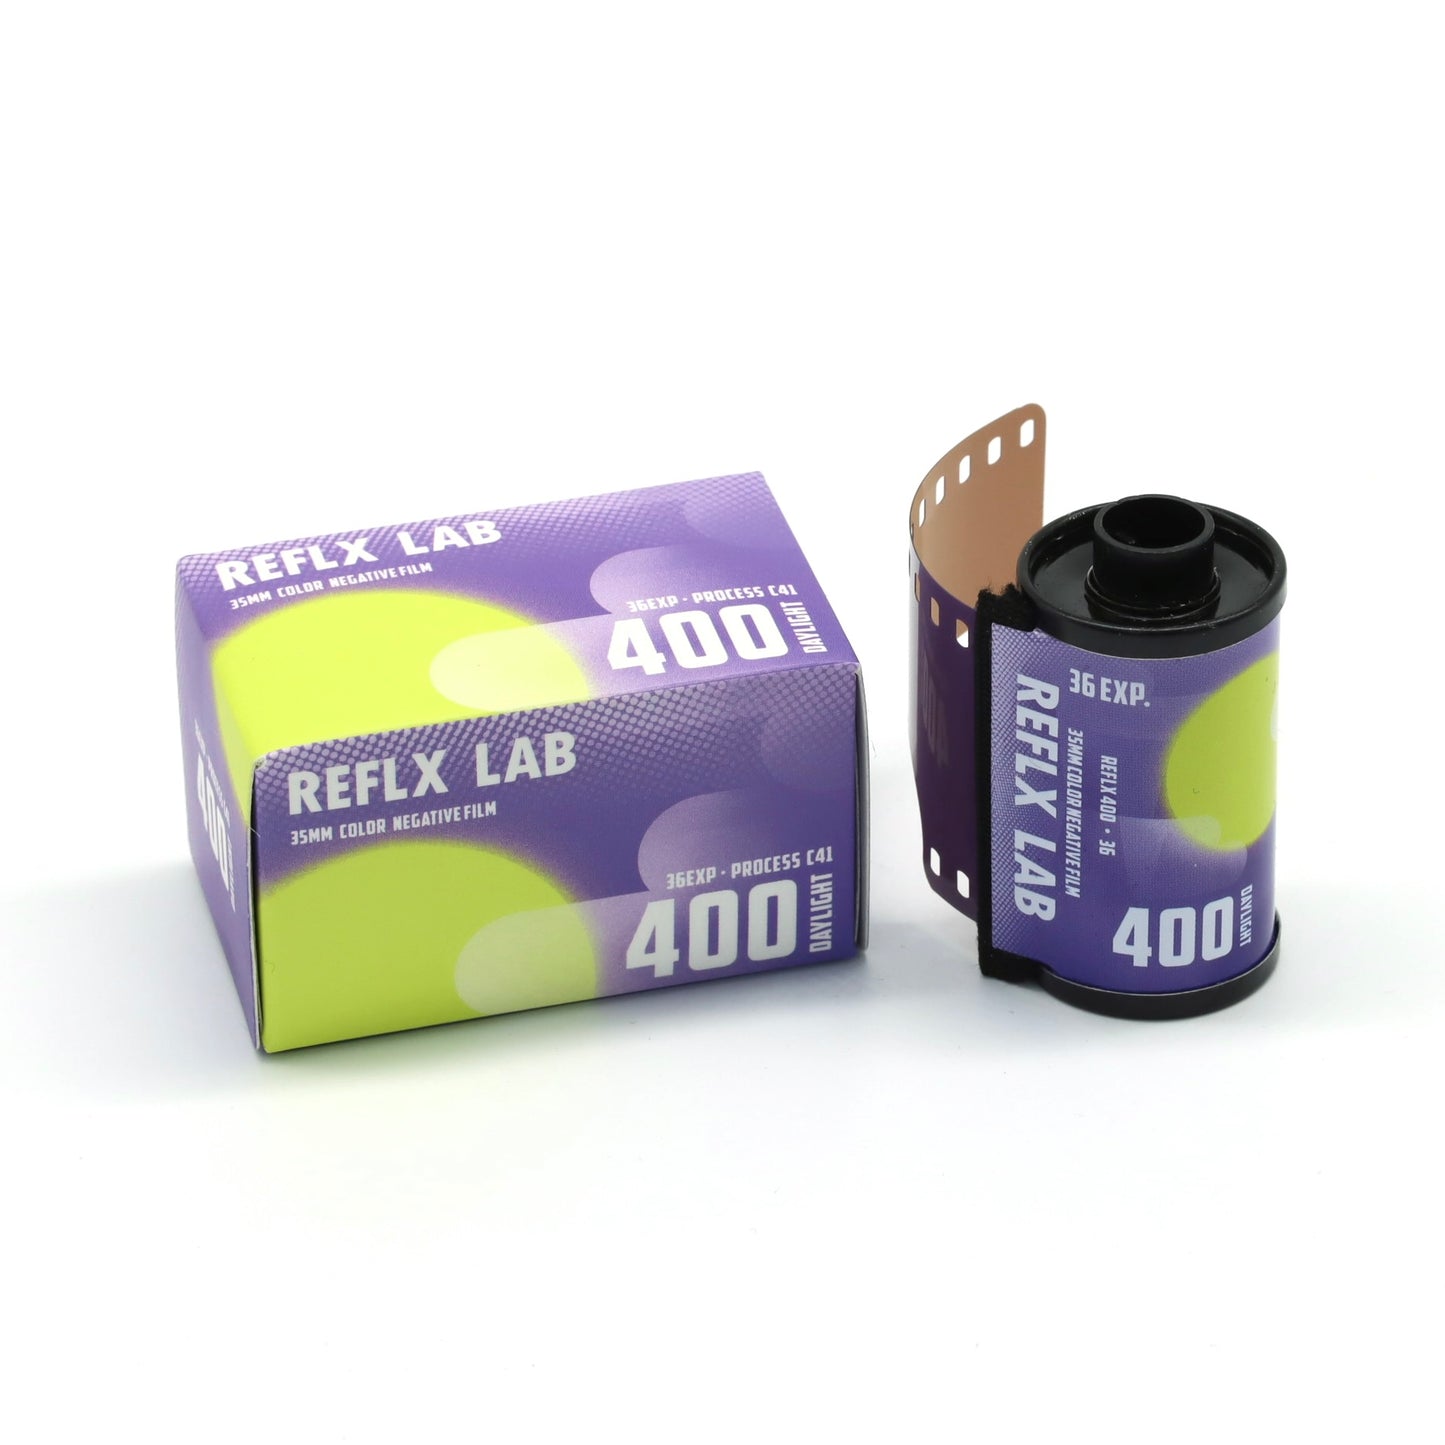 Reflx Lab 400 Daylight 35mm Color Negative Film 36EXP